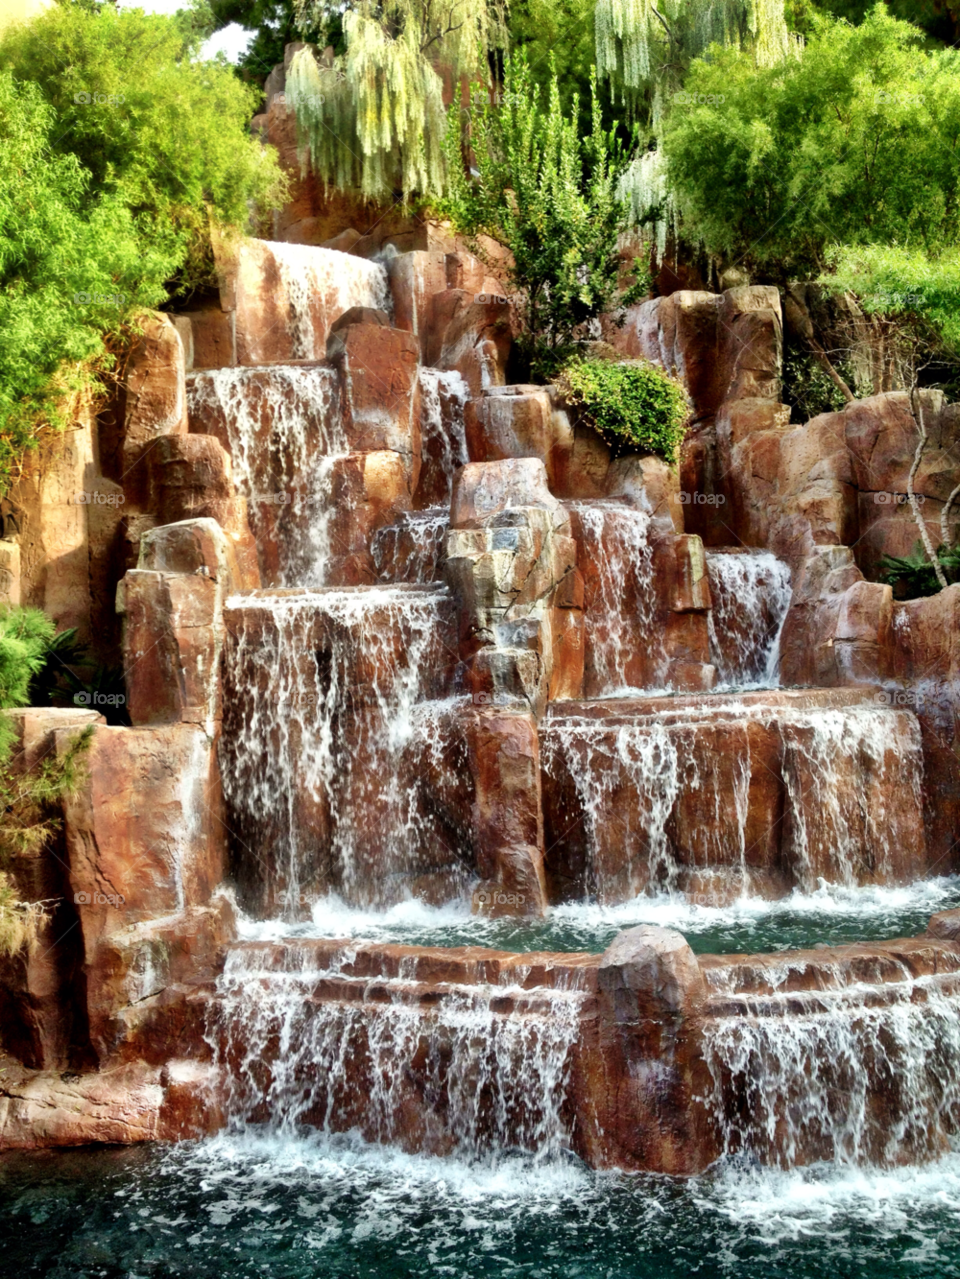 travel water waterfall rocks by bcpix